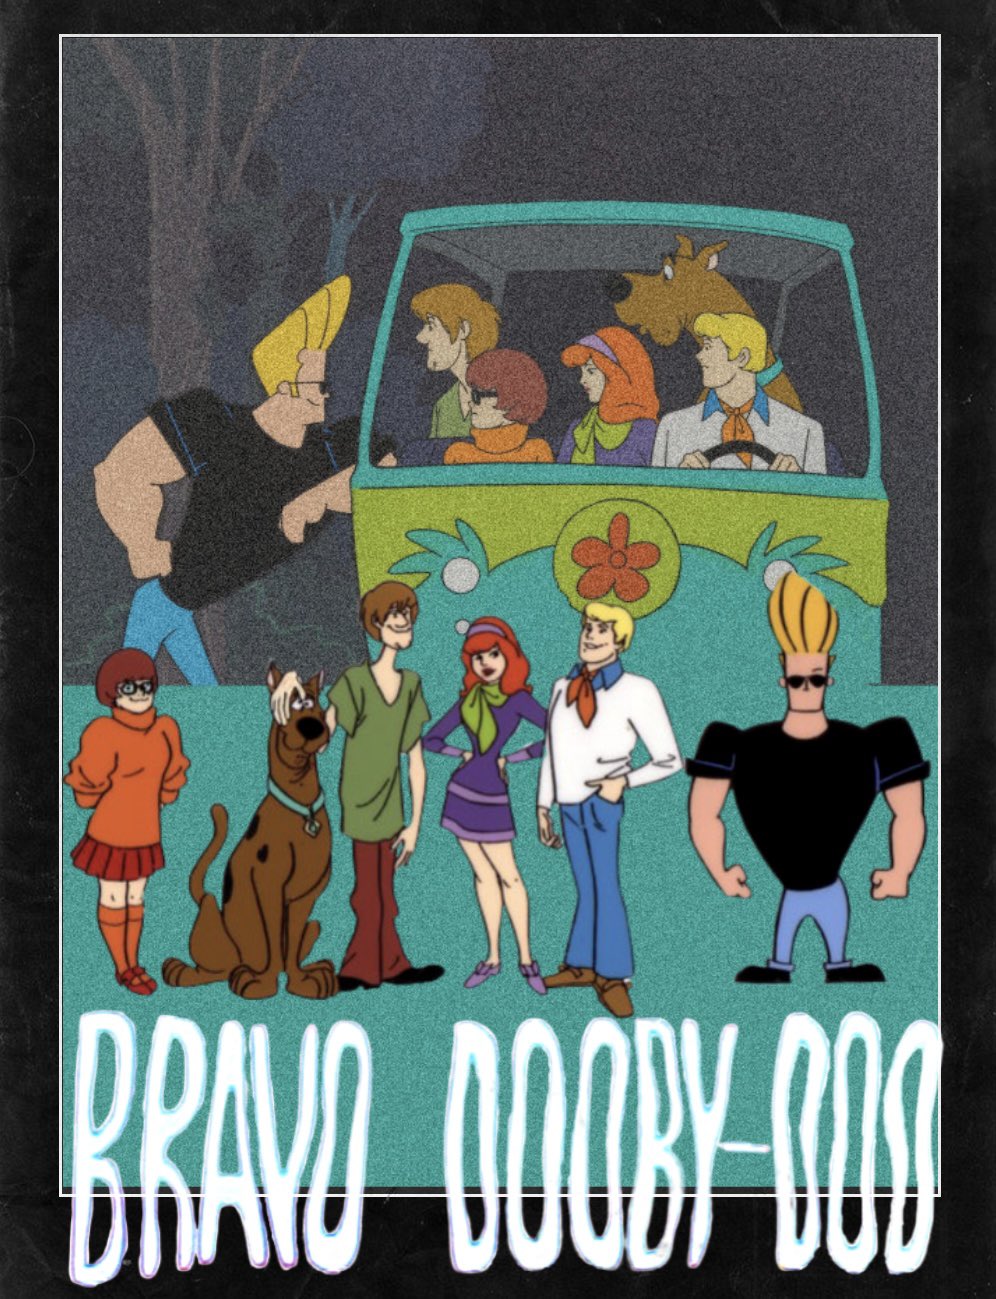 Johnny bravo Bravo Dooby Doo is probably my favorite crossover